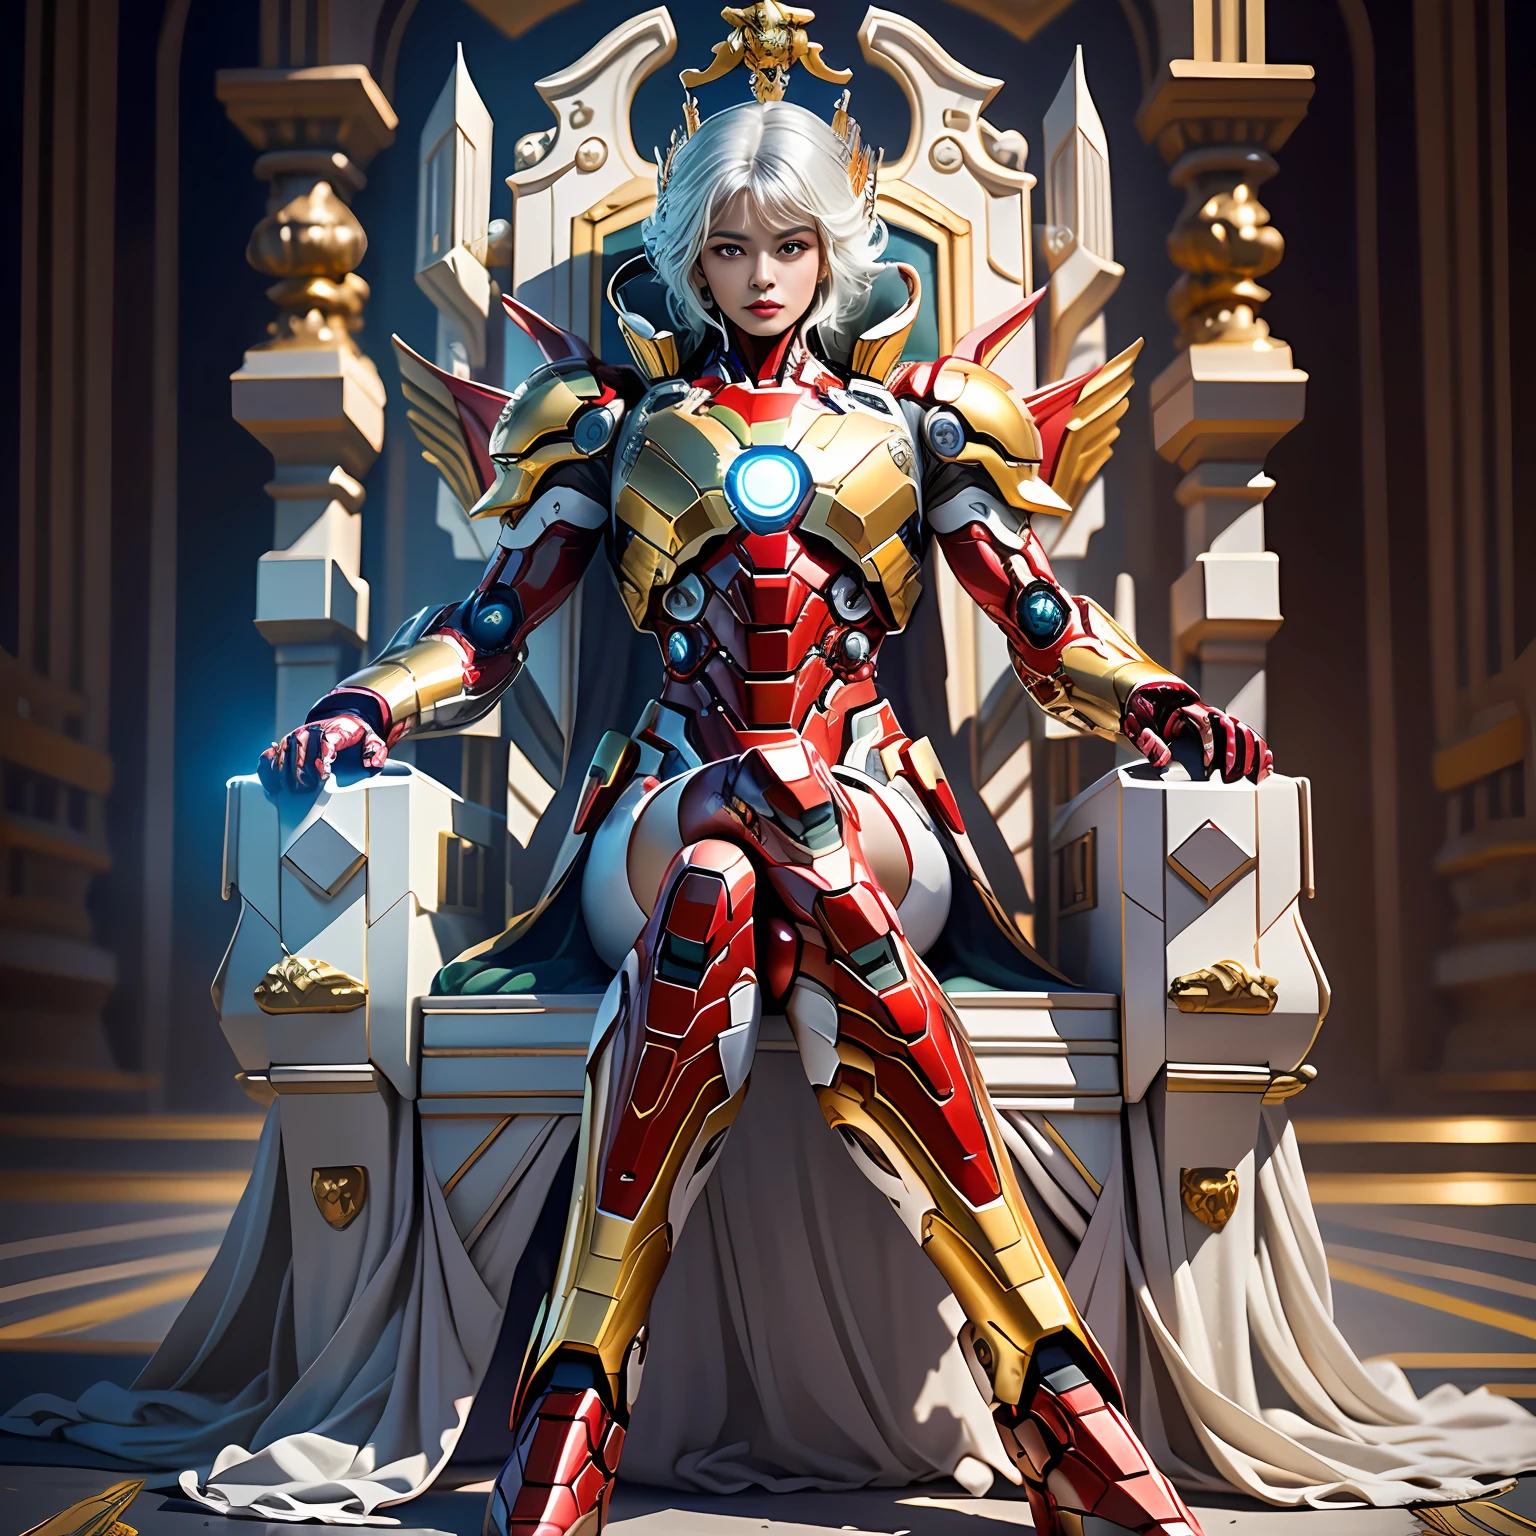 Cyberpunk style mecha Marvel Movie Iron Man 聖鬥士 Kamen Rider Queen sitting on throne, 古老的技術, 古老的傳說, 白色的頭髮 (白絲襪: 1.5) (王座: 1.4), 劍, (機甲戰神), 埃及風格, (聖鬥士: 1.7), 道教符號, (龍紋: 1.6), (金線: 1.5) 超現實的, 博卡效應, 以大衛拉夏貝爾的風格拍攝, 生物發光調色板: 紫丁香, 淡金色, 明亮的白色, 超細, 電影靜物, 活力, 不切實際的引擎風格, 薩基米昌, 下胸部, 完美的眼睛, 最高畫質16K, 靈感來自海瑞溫斯頓, 使用佳能 EOS R 6 拍攝, 傑作, --混沌50, 白髮, 王冠, 眼睛下方有顆痣, 吉奇漢姆, 廣角, 佳能, 從上面, 投影圖, 光線追蹤, 超現實主義, 有紋理的皮膚